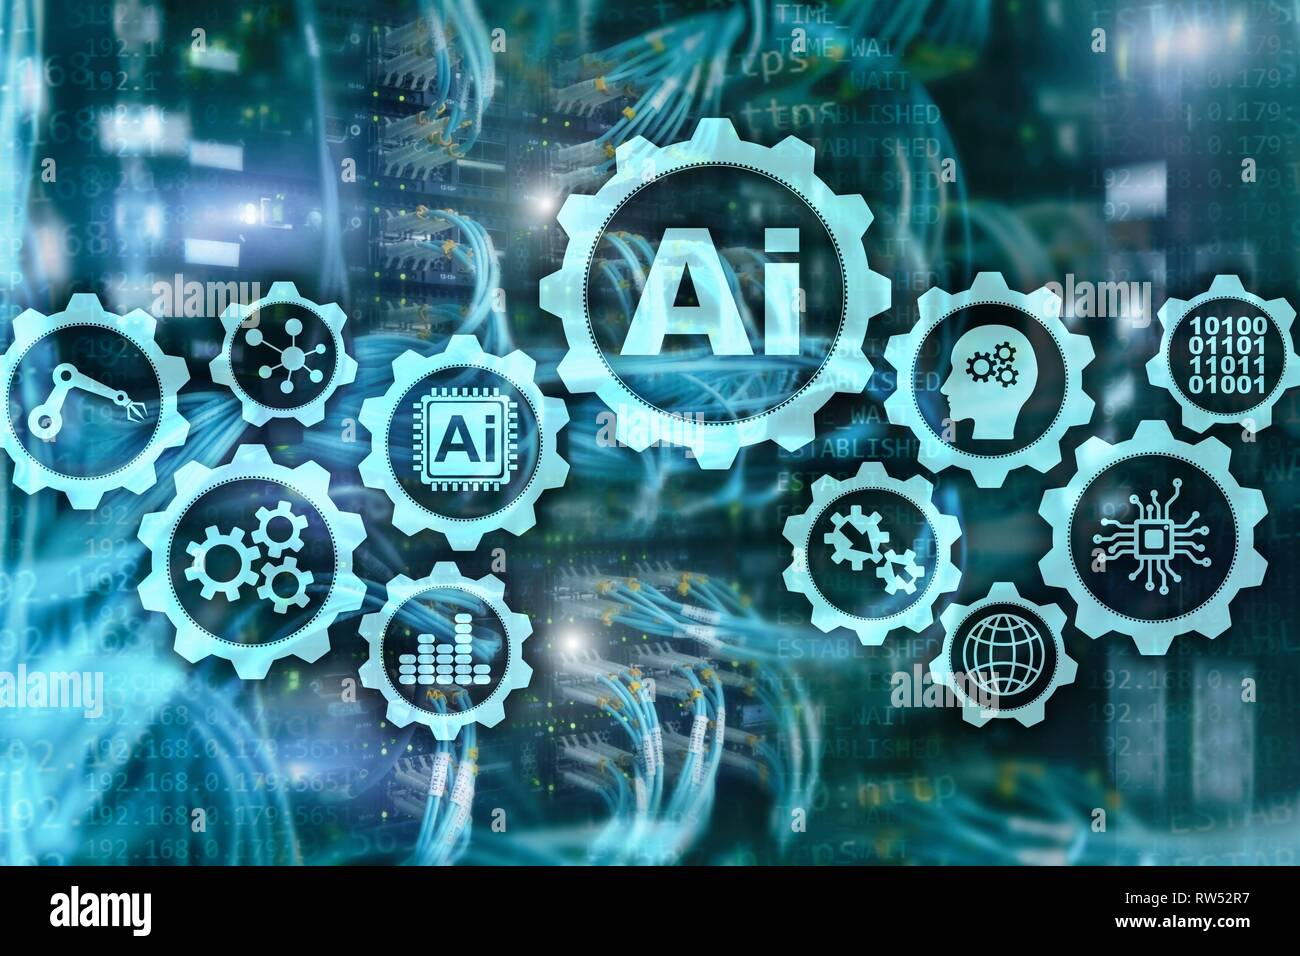 Artificial intelligence hi-tech business technologies concept. Futuristic server room background. AI Stock Photo